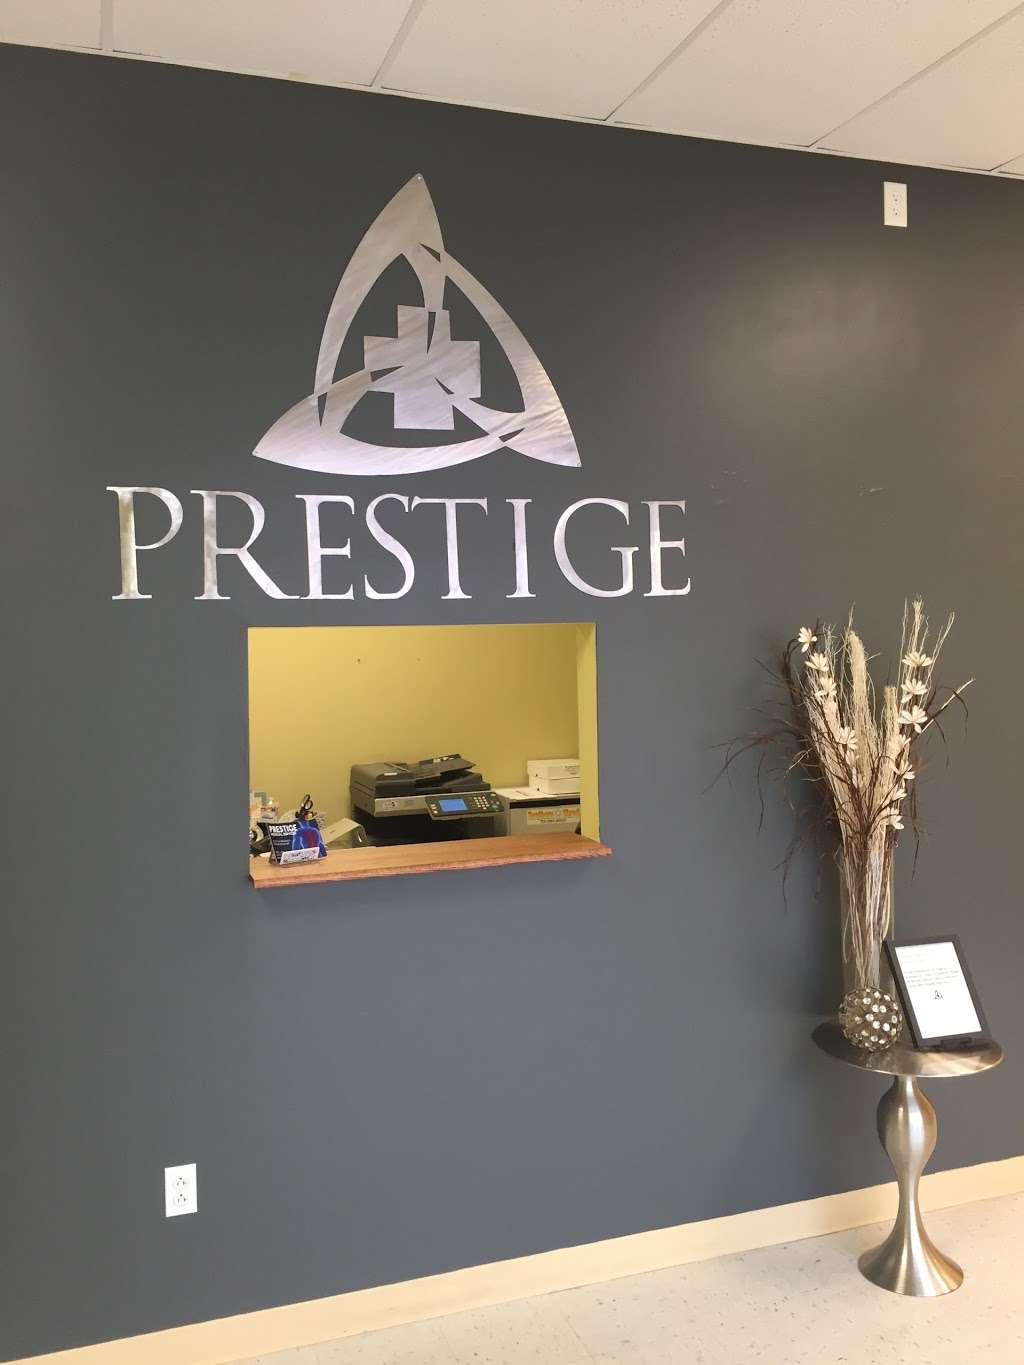 Prestige Medical Services | 2620 Cullen Blvd #214, Pearland, TX 77581 | Phone: (281) 741-4880